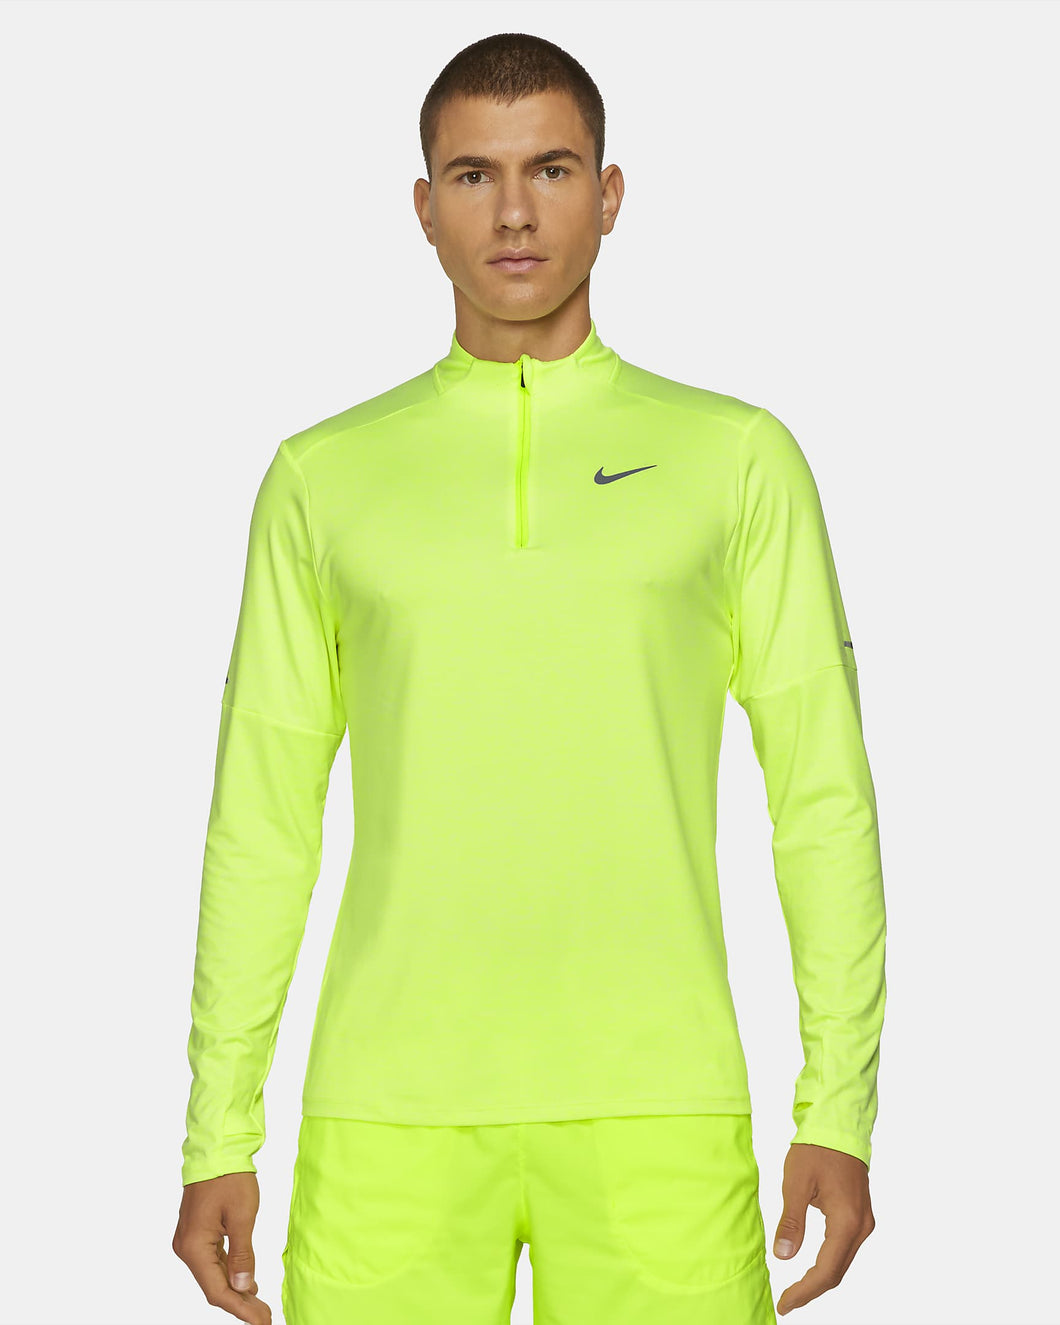 Nike Men's Dri-Fit Element 1/4 Zip Yellow